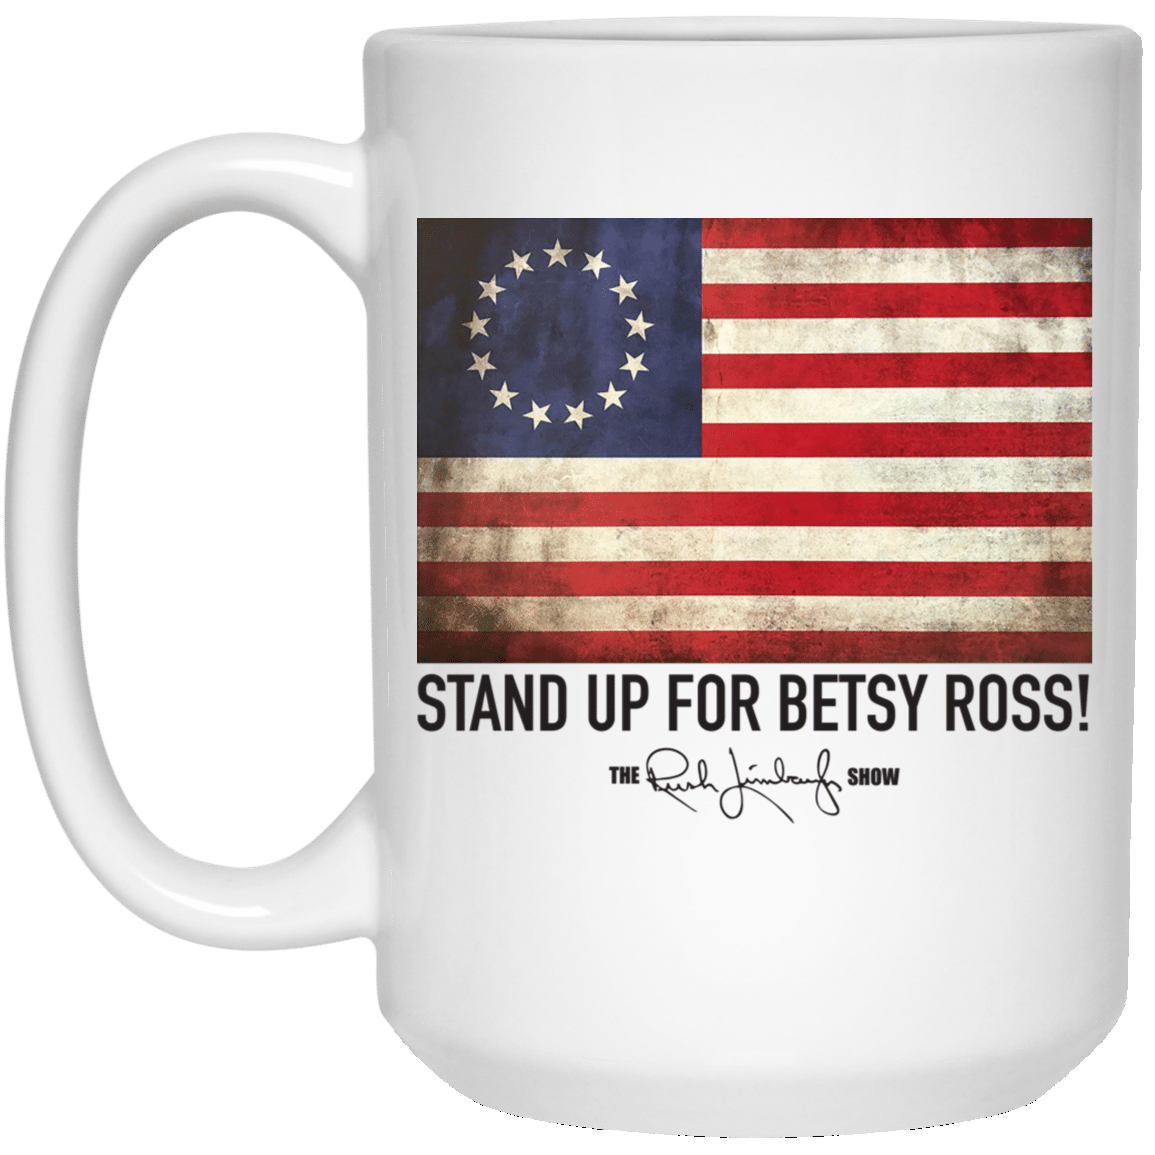 Rush Limbaugh Betsy Ross Flag Coffee Mug Style: 21504 15 oz. White Mug, Color: White